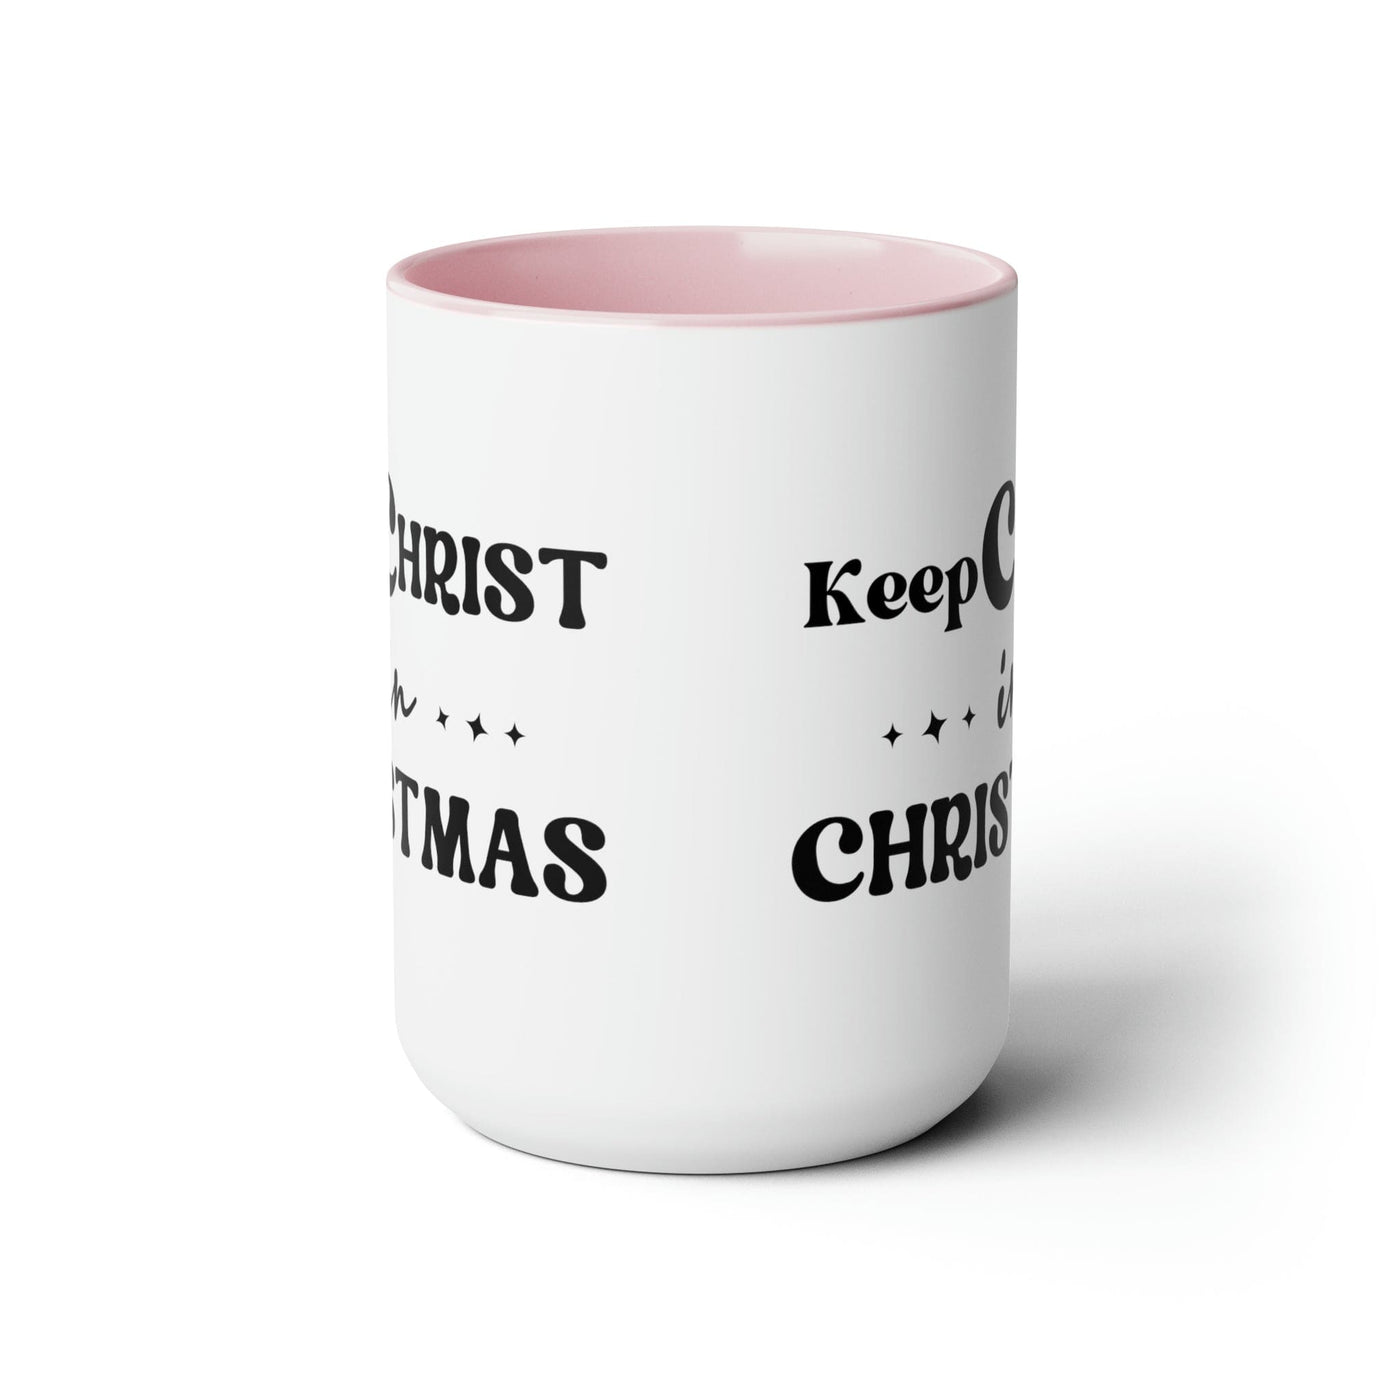 Accent Ceramic Coffee Mug 15oz - Keep Christ In Christmas Christian Holiday